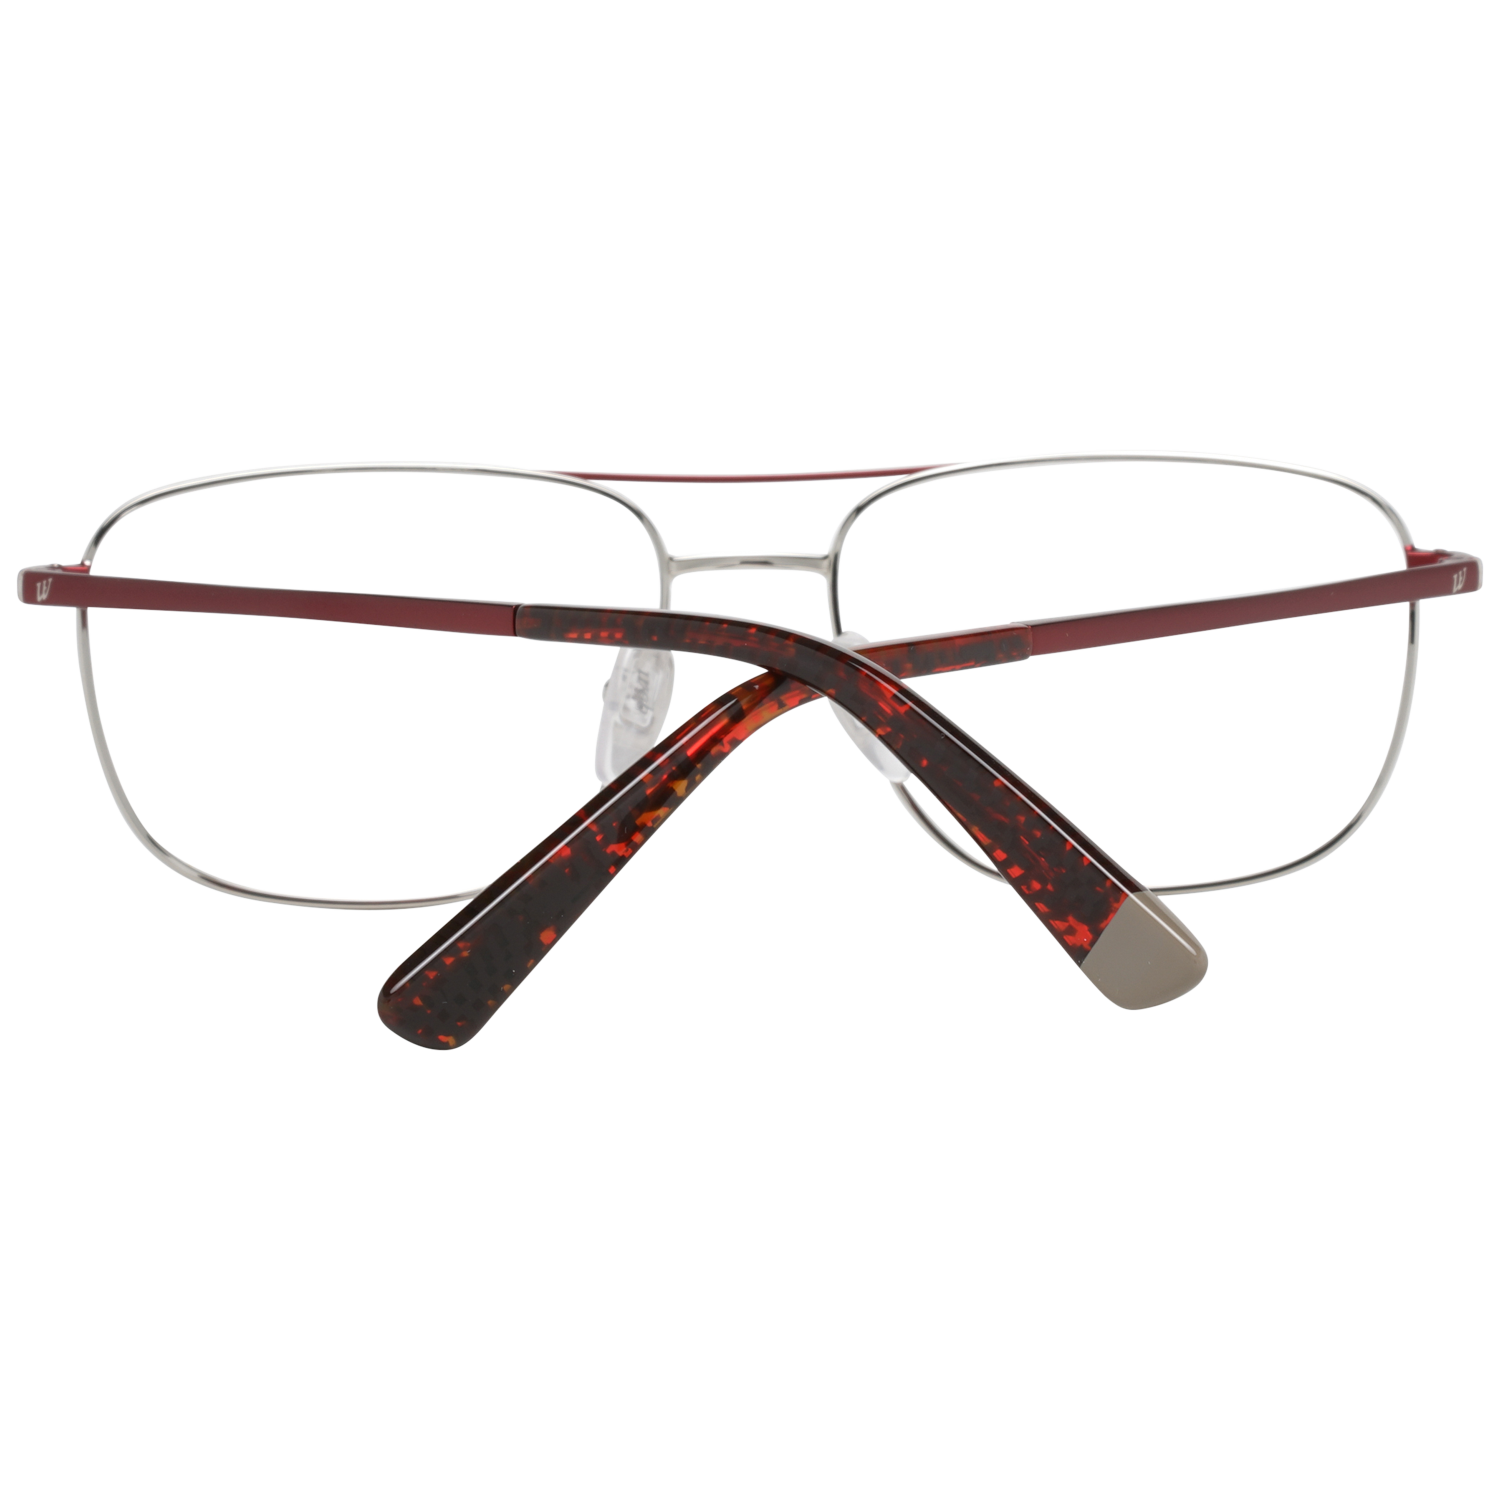 Web Frames Web Prescription Glasses Optical Frame WE5318 016 55 Eyeglasses Eyewear UK USA Australia 